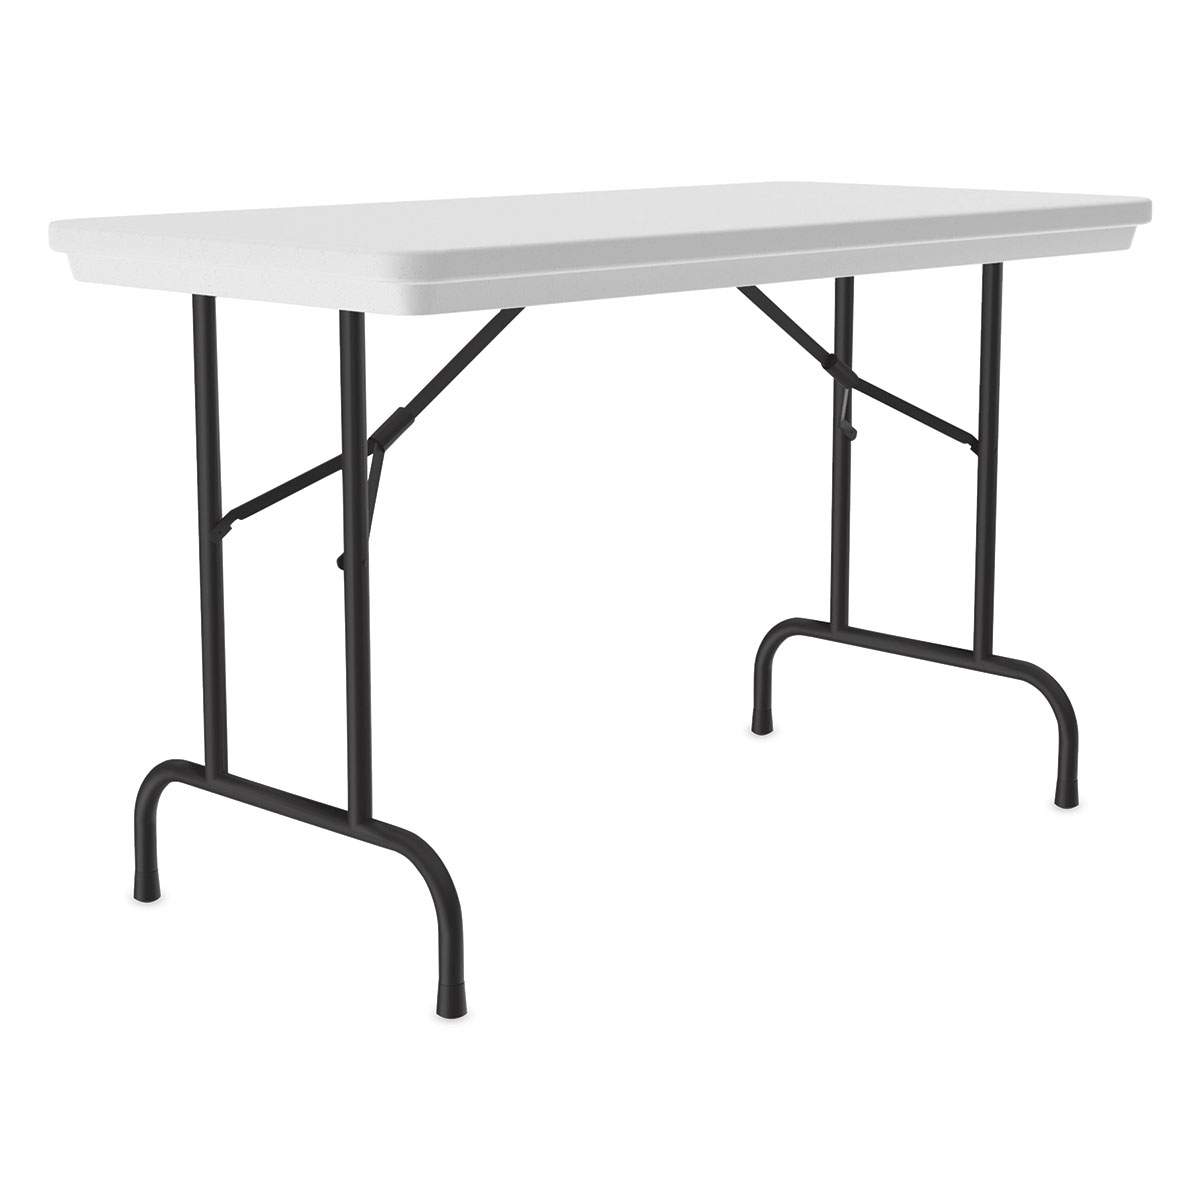 Correll Plastic Resin Folding Table - 24' x 48', Granite, Fixed Height